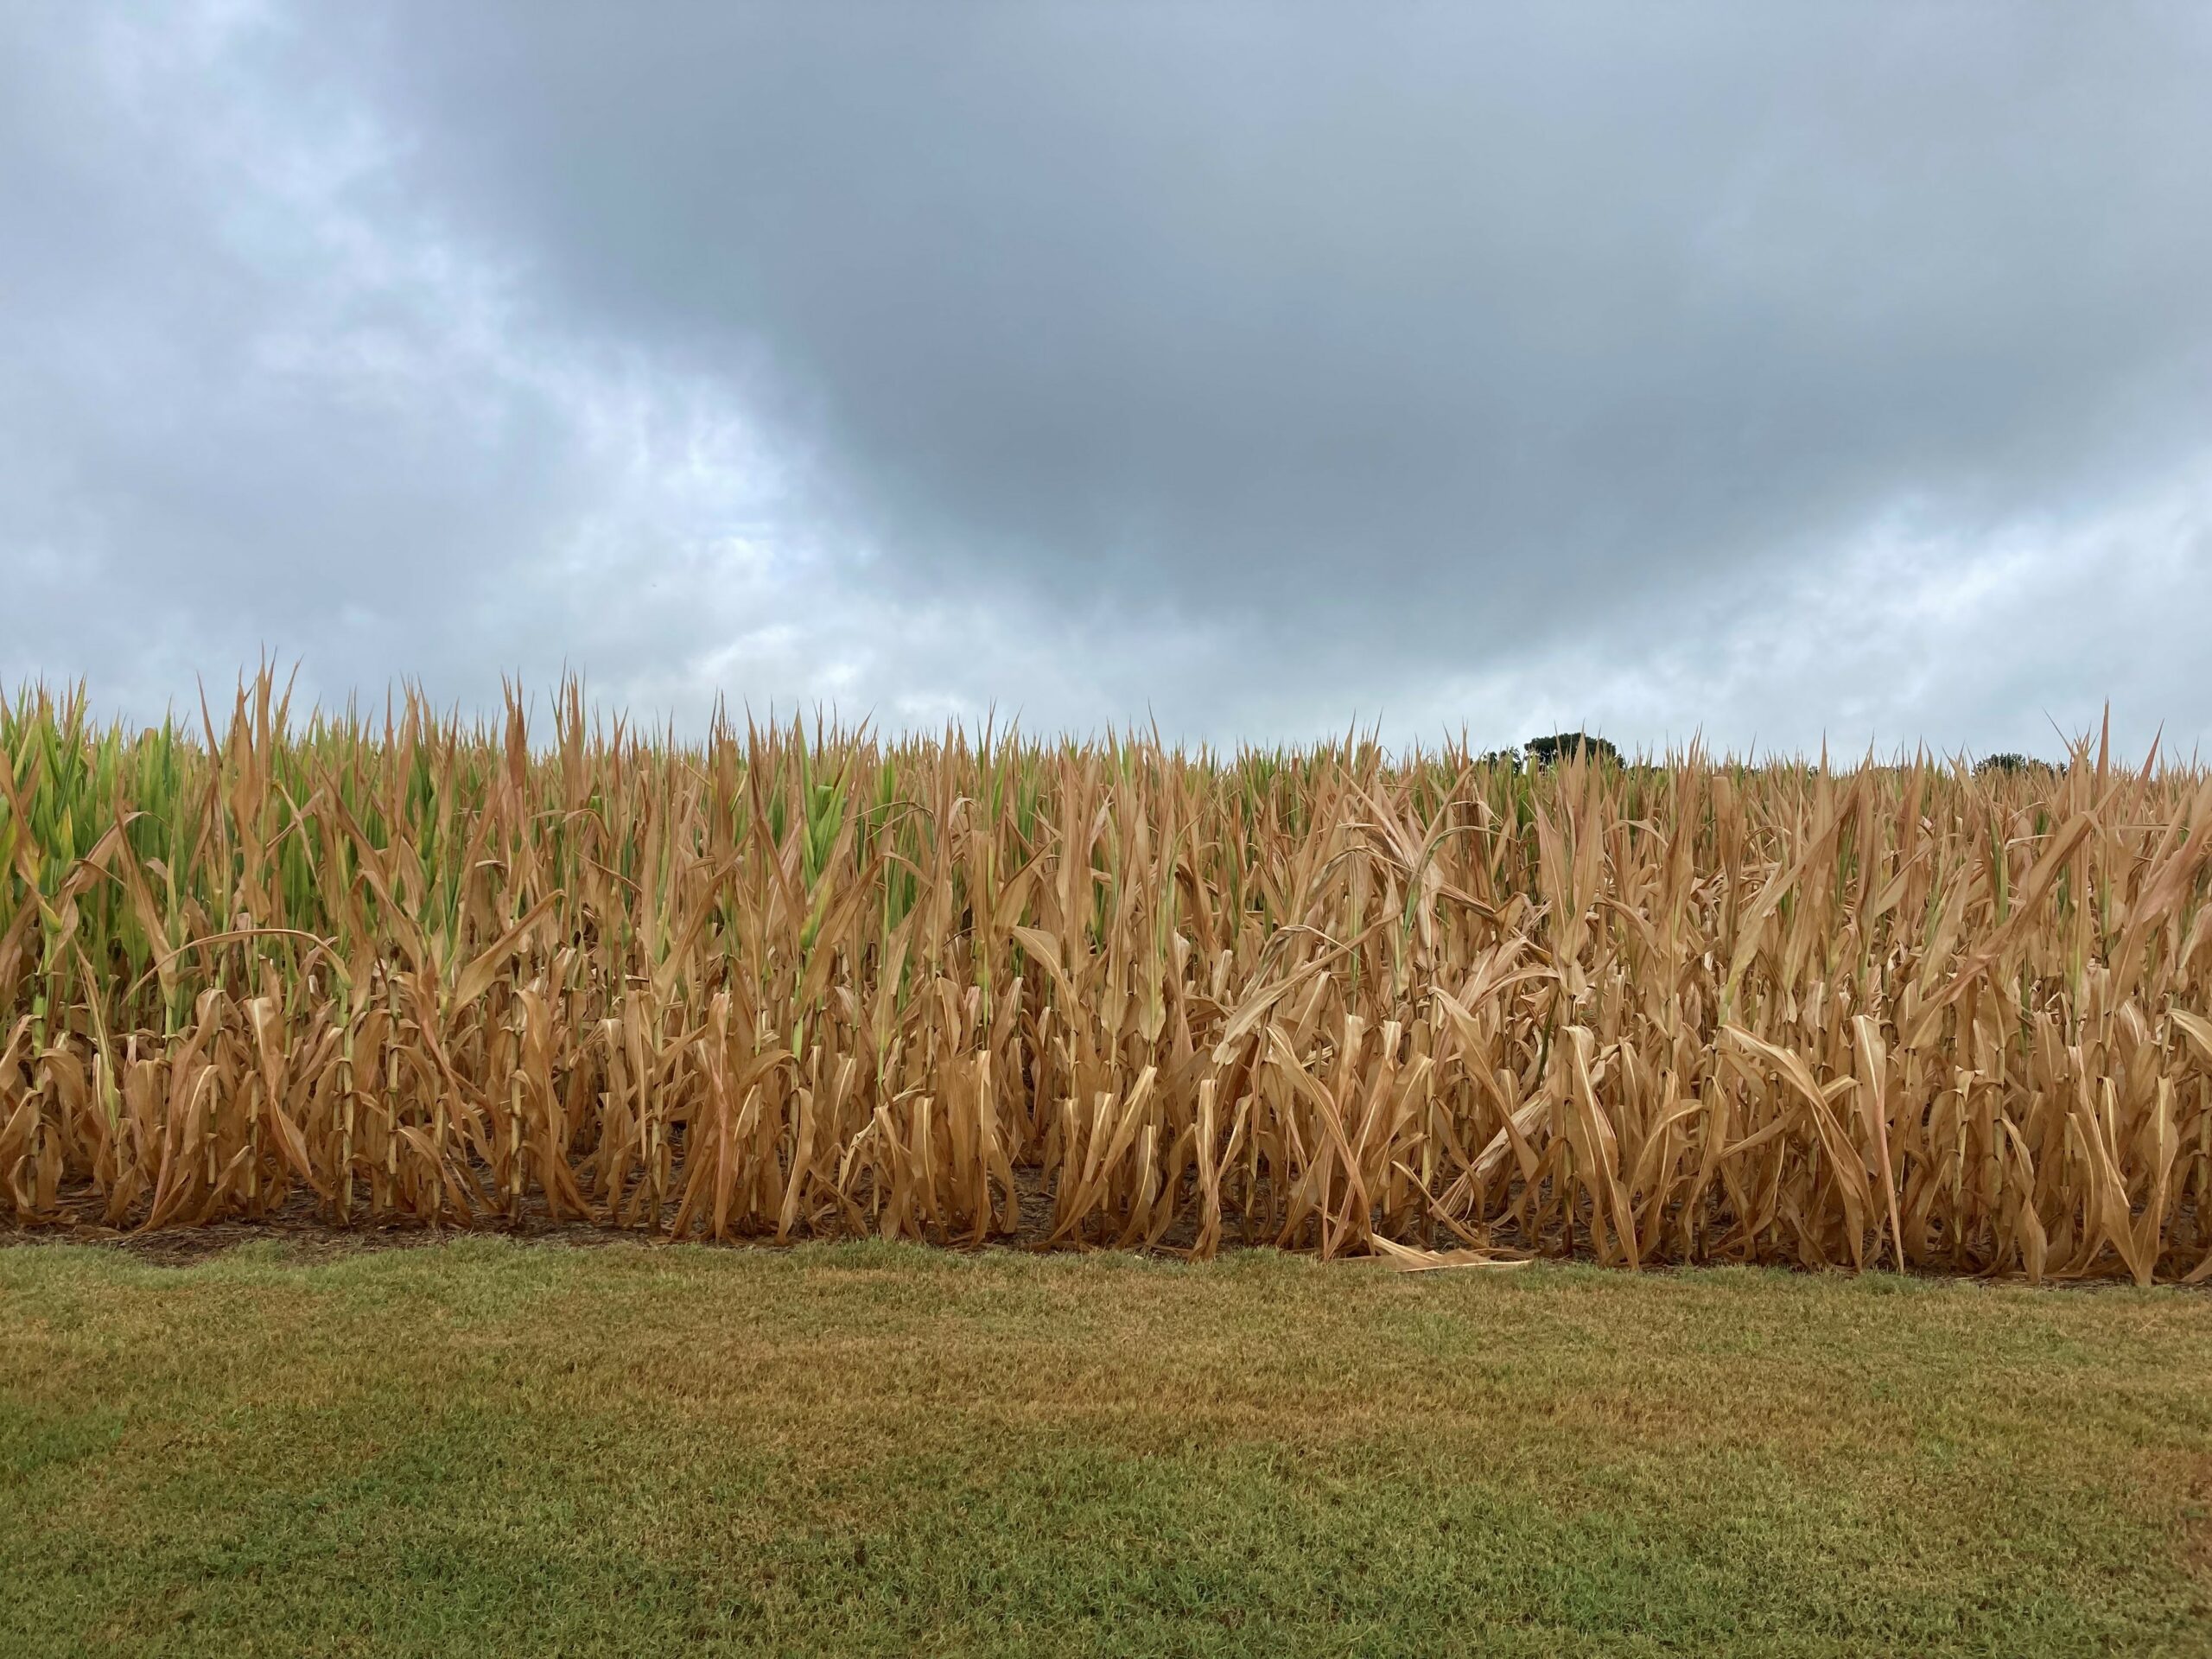 corn field harvested in ohio